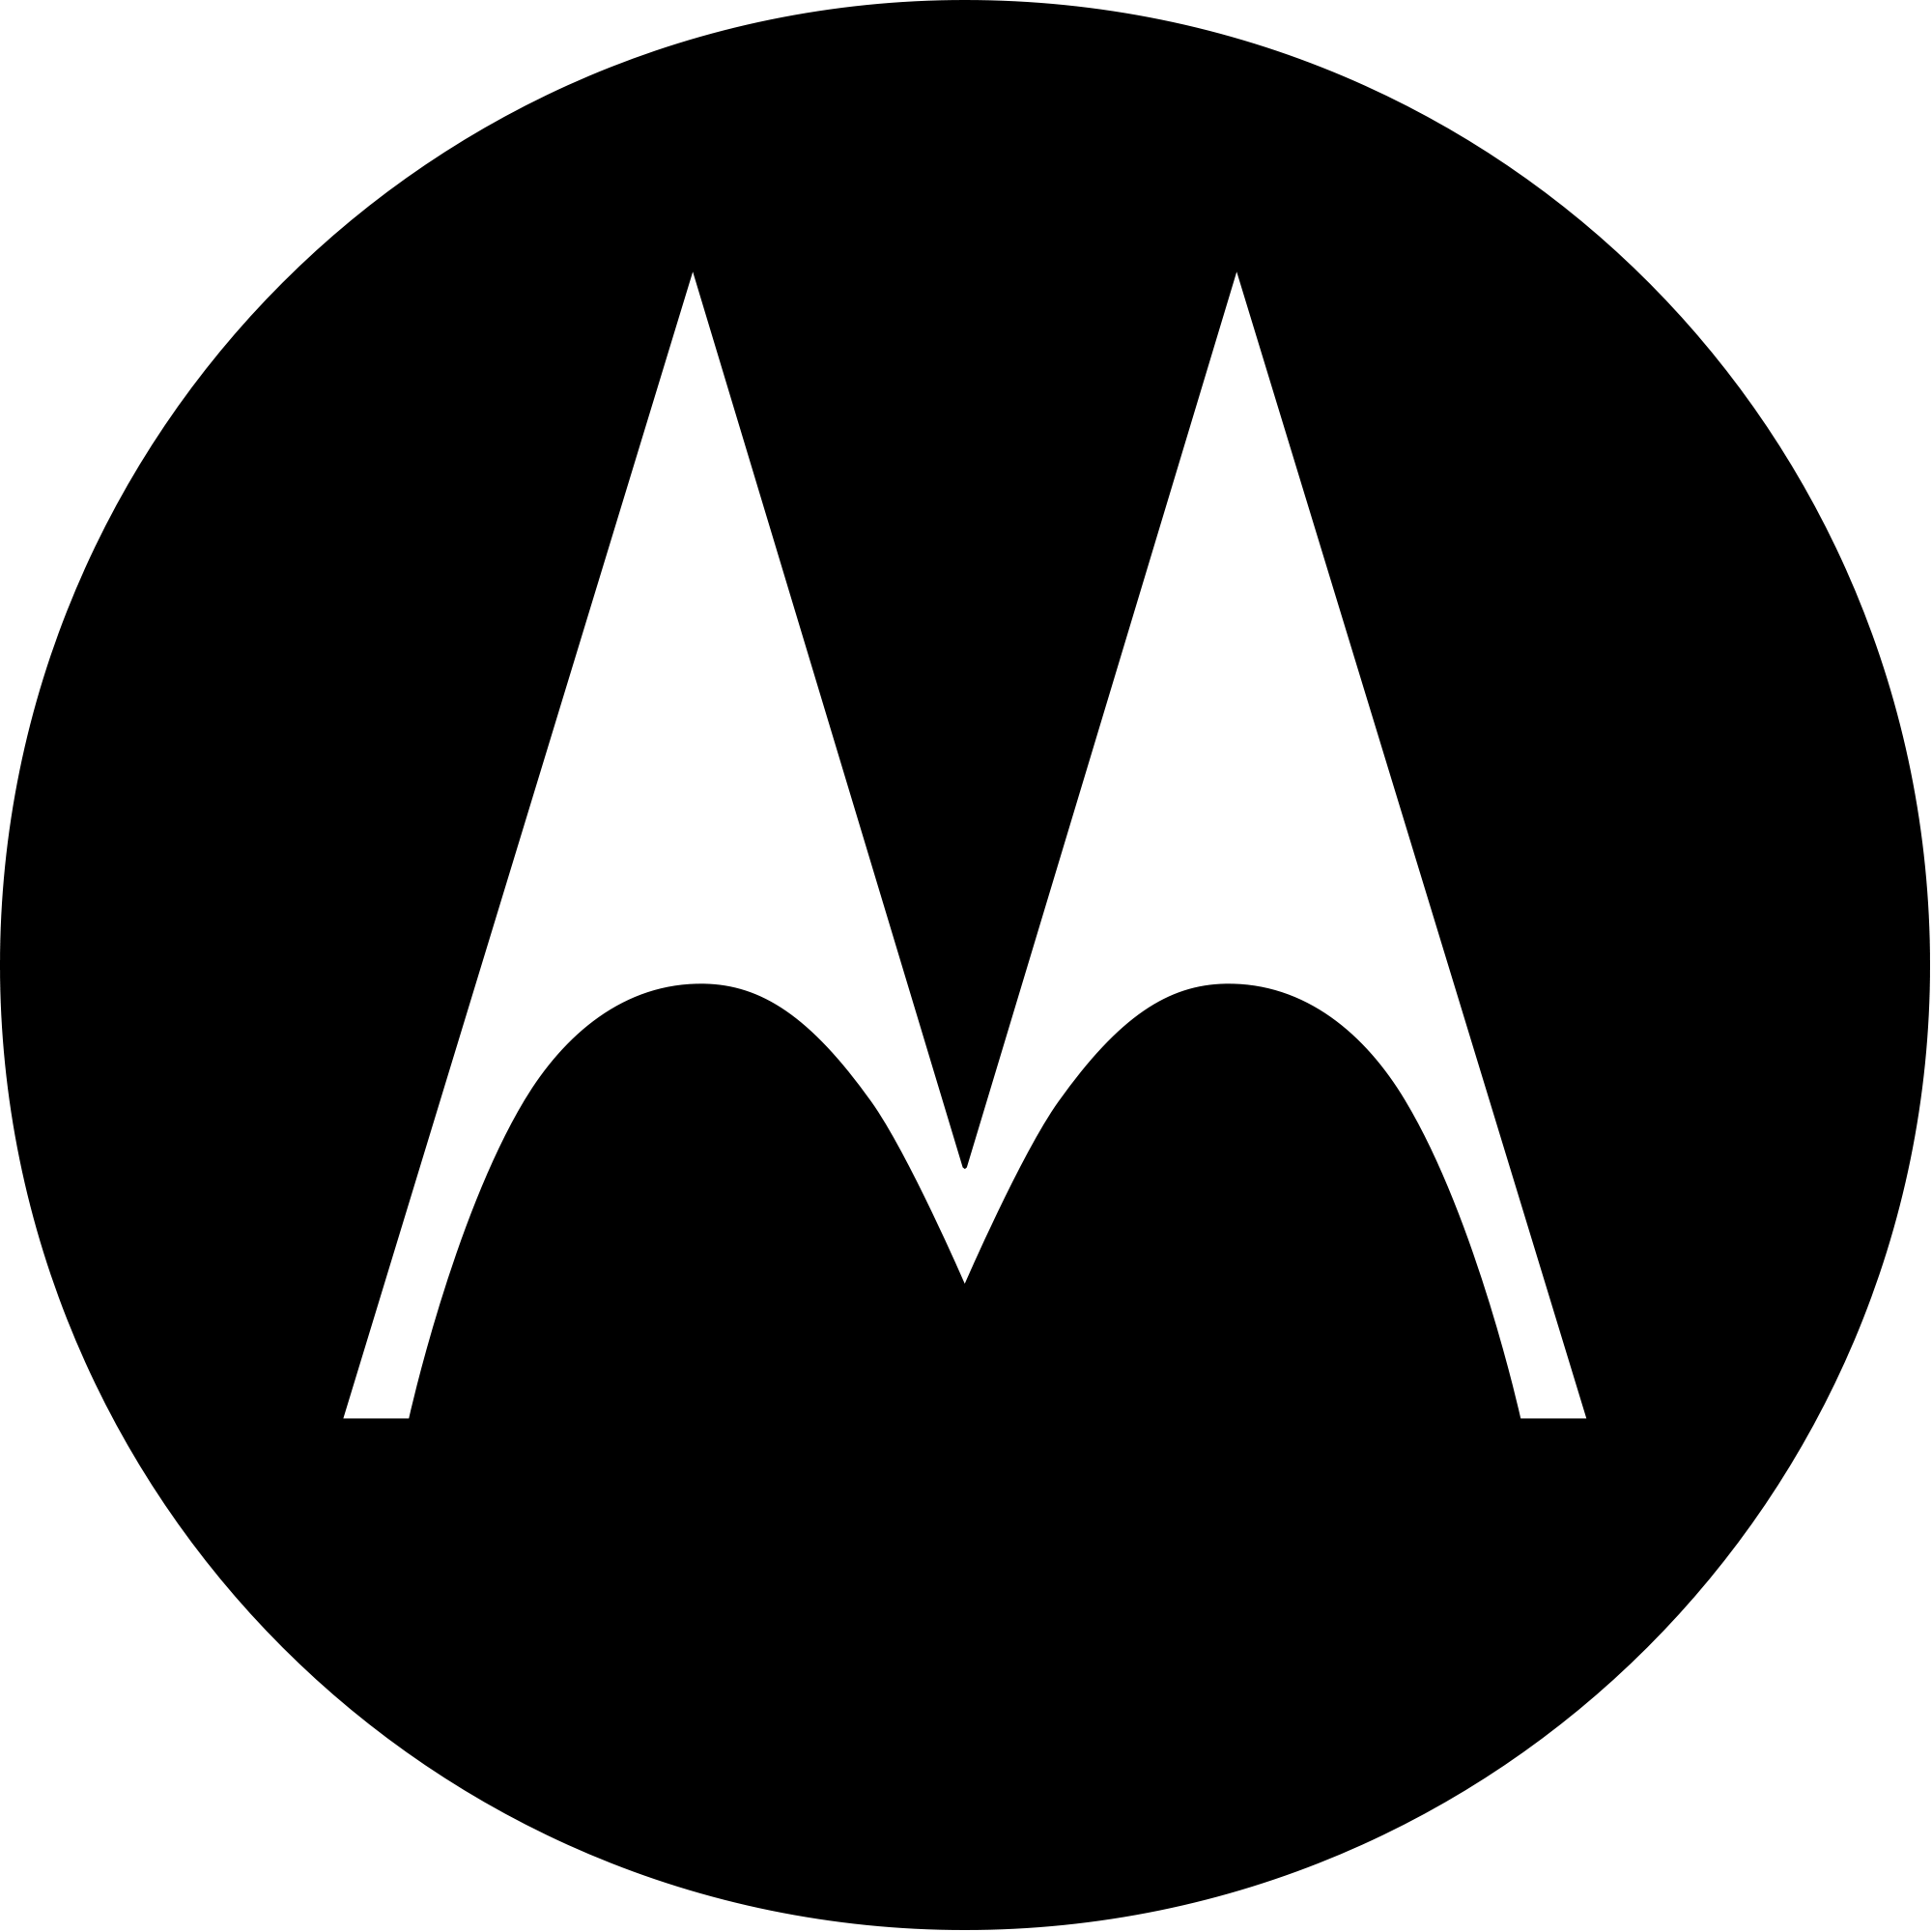 Motorola M Logo - File:Motorola M symbol black.svg - Wikimedia Commons